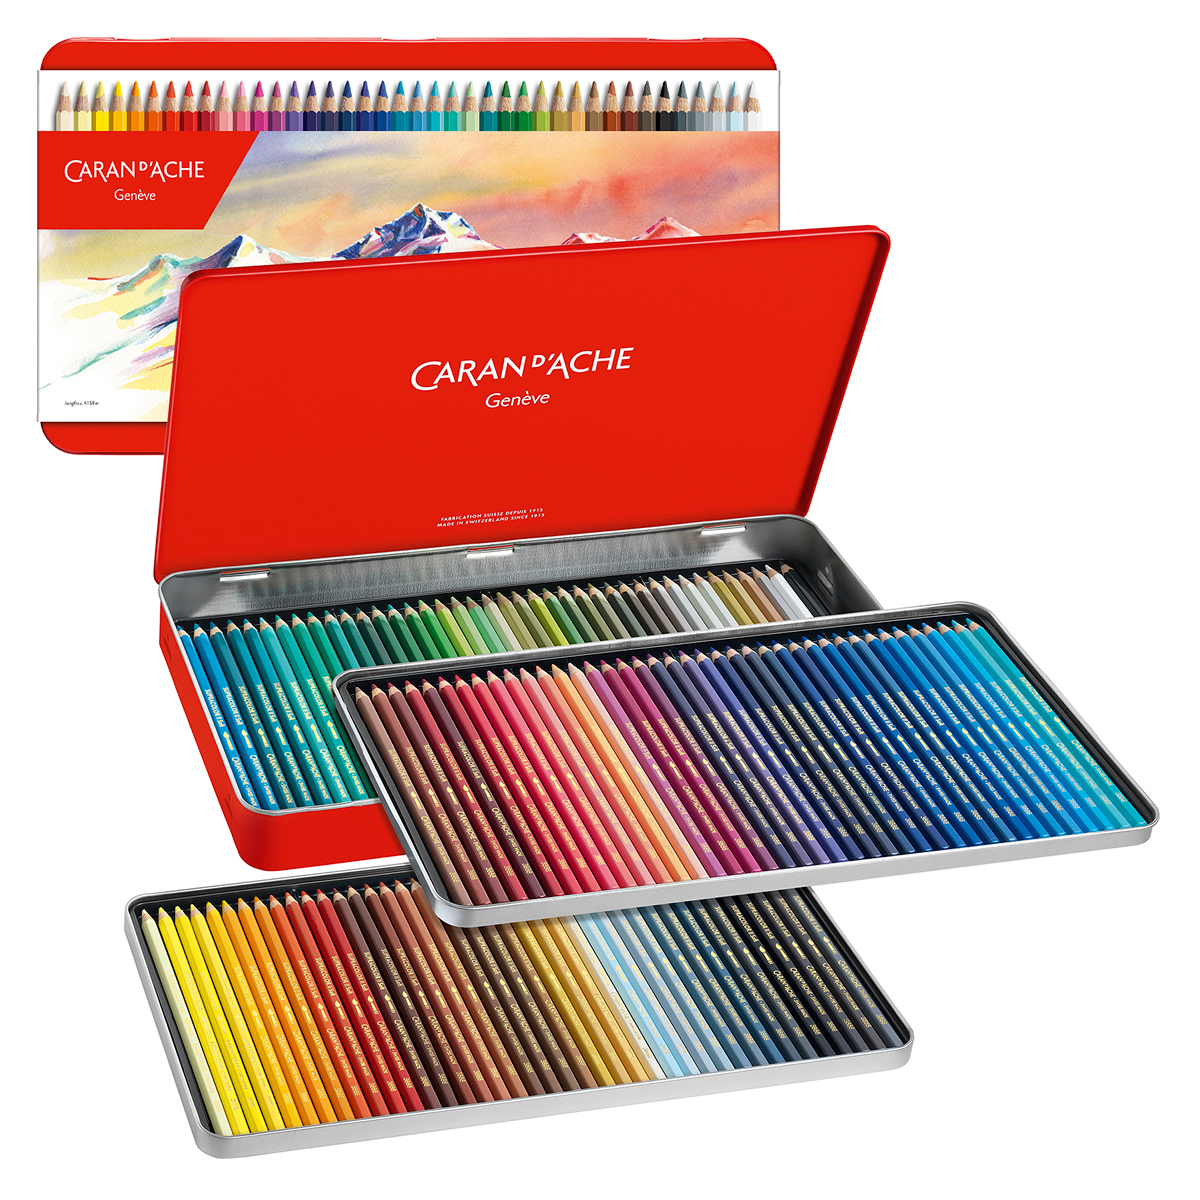 Supracolor Aquarelle 120-pack in the group Pens / Artist Pens / Watercolor Pencils at Pen Store (105018)